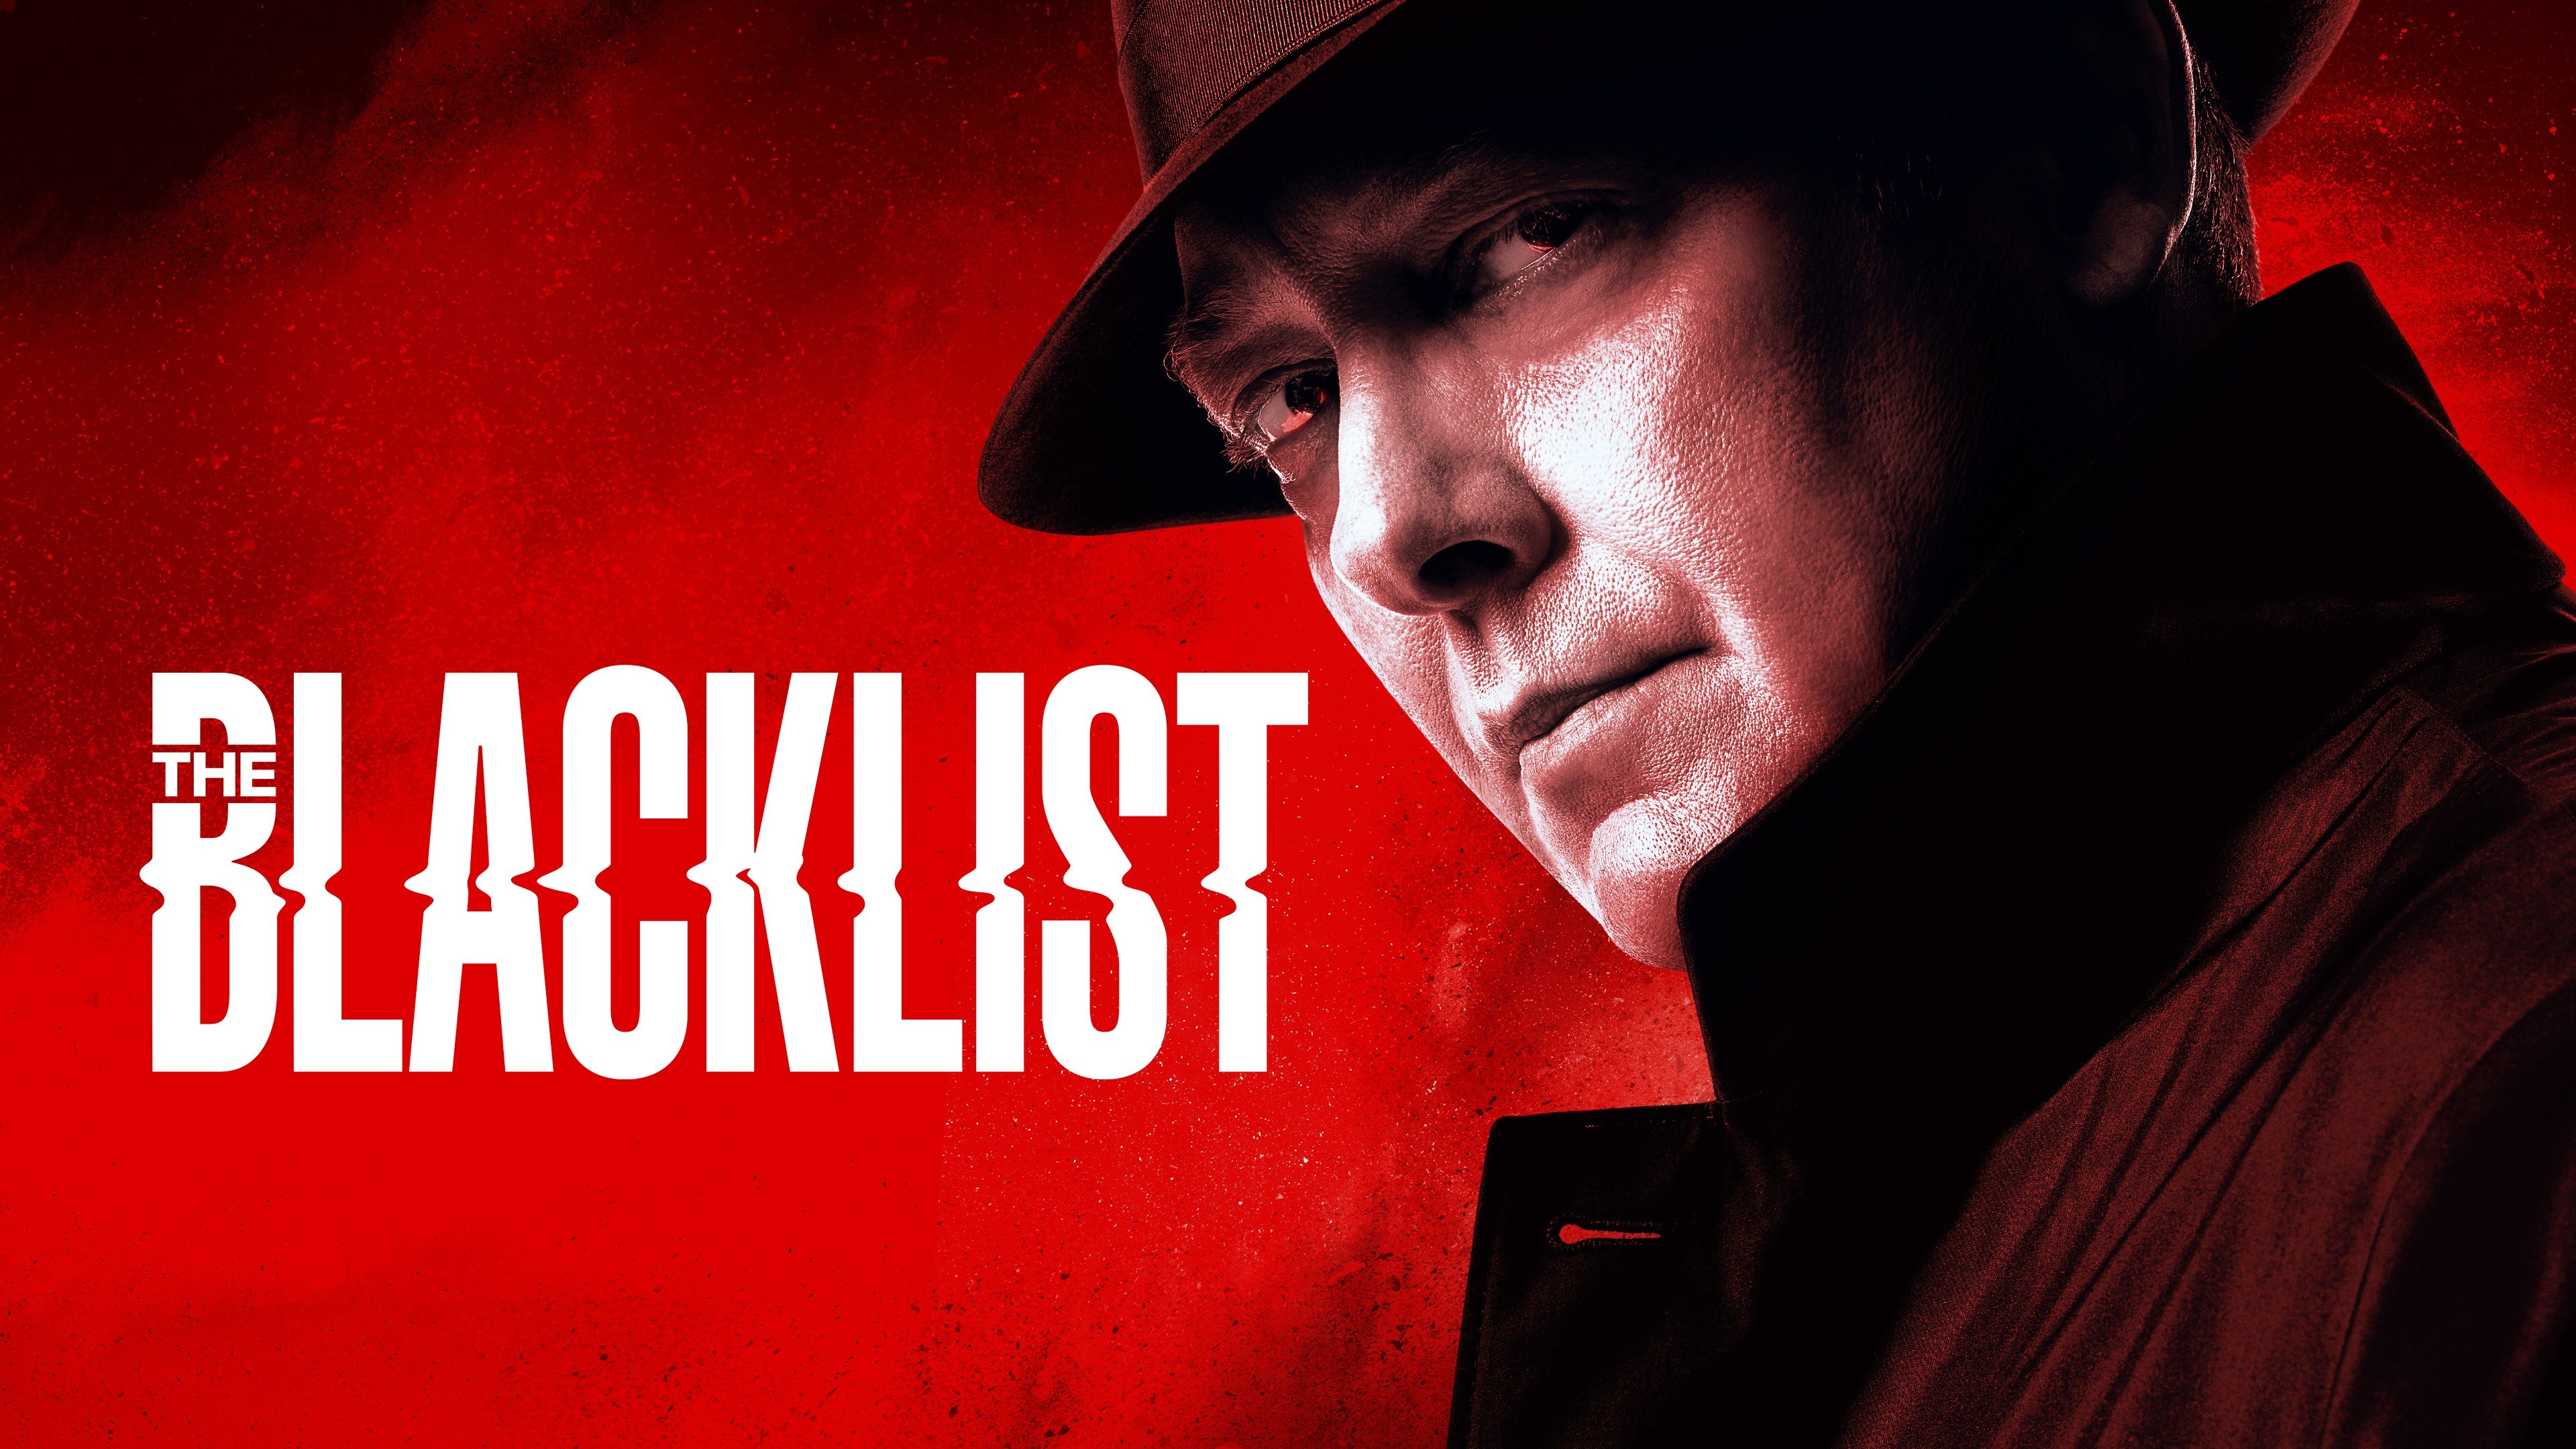 watch blacklist season 3 online free